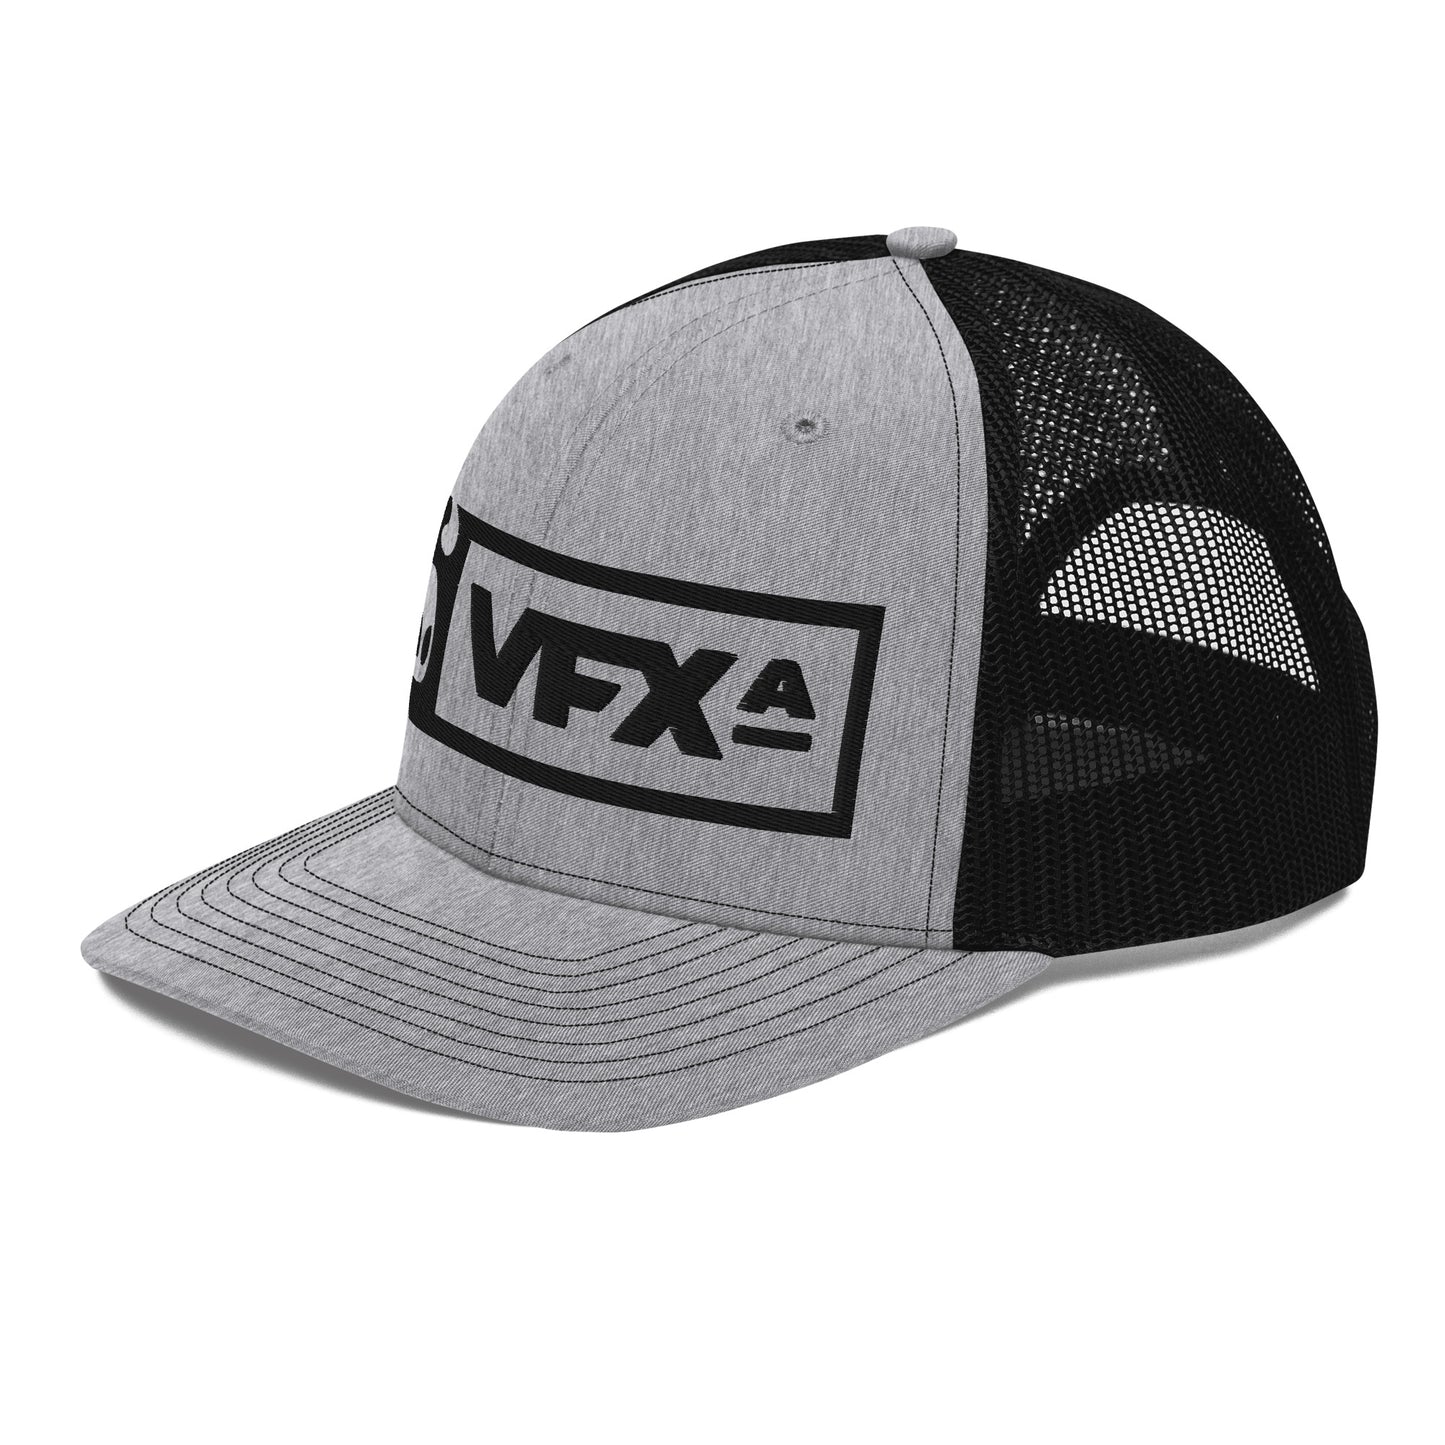 Trucker Cap: Dark VFX-A Logo